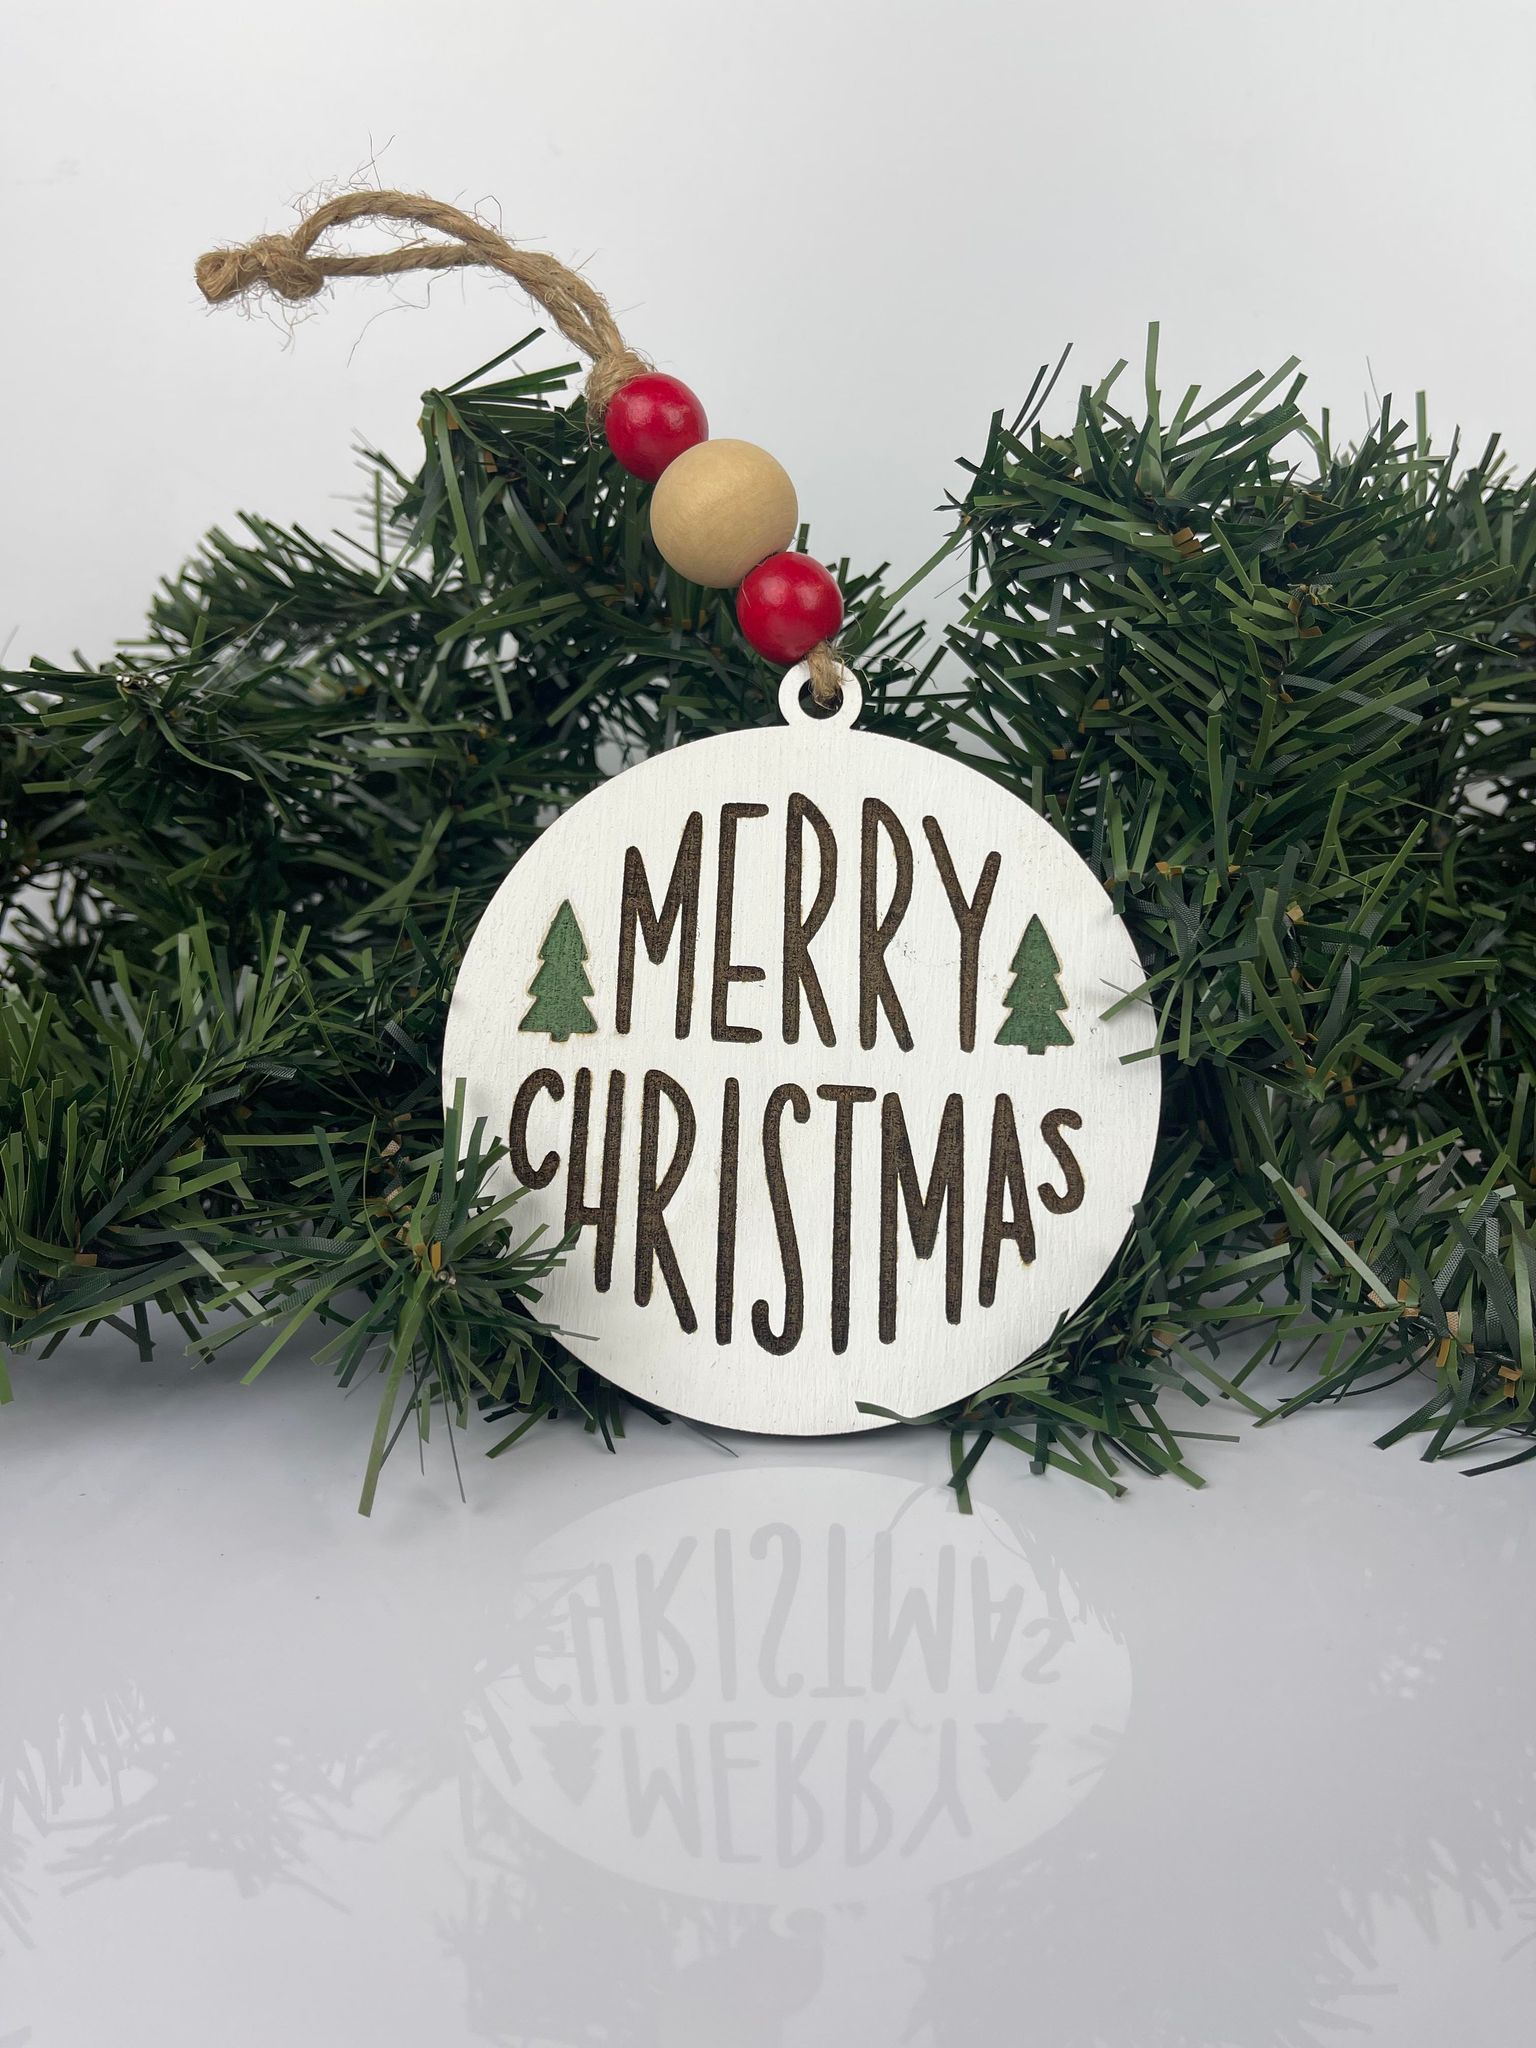 Christmas Felt Ornaments - Kids Holiday Arts and Crafts Box